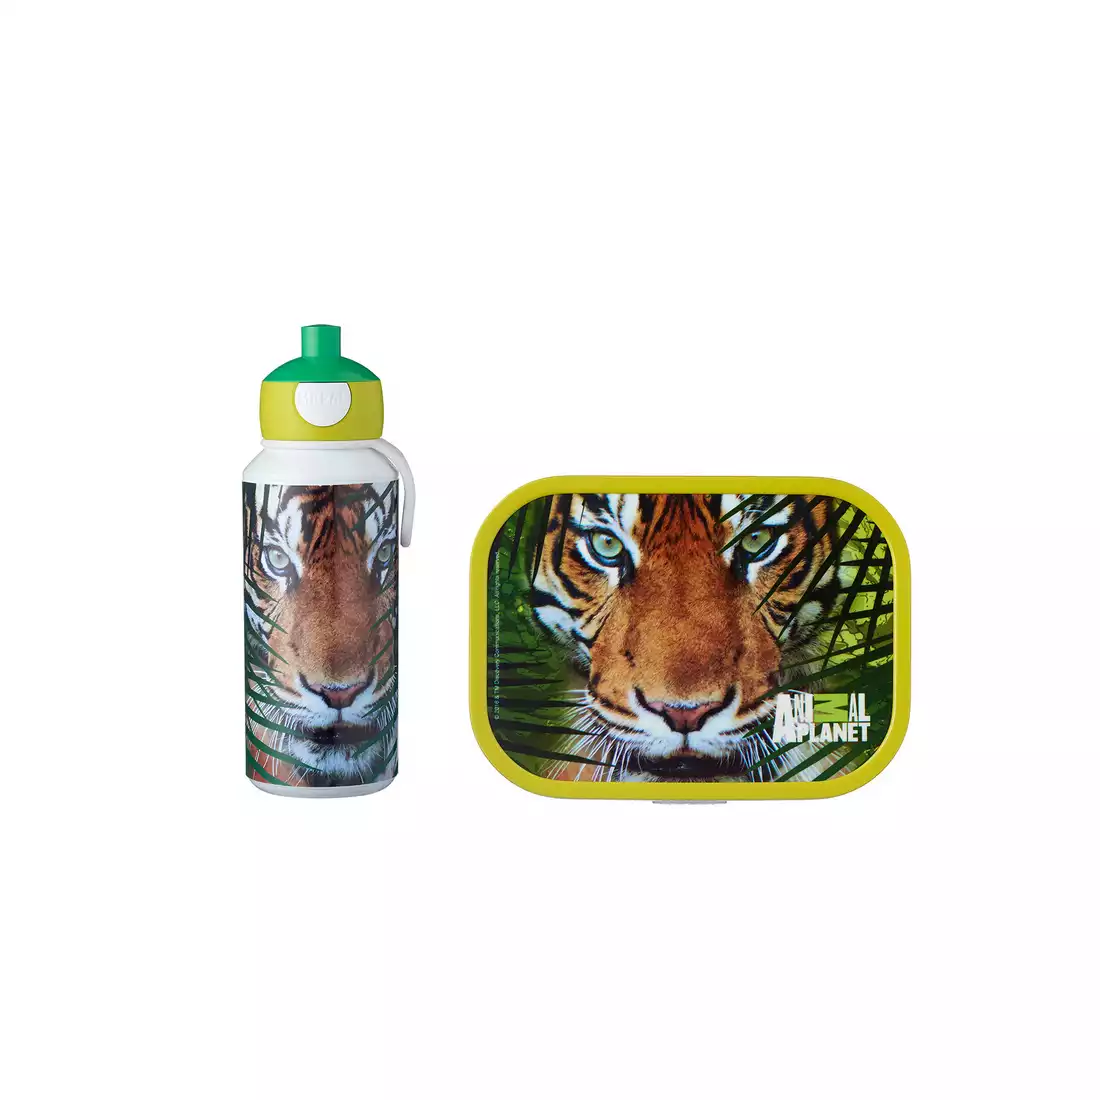 Mepal Campus Lunch set Animal Planet Tiger detská súprava vizes palack + lunchbox